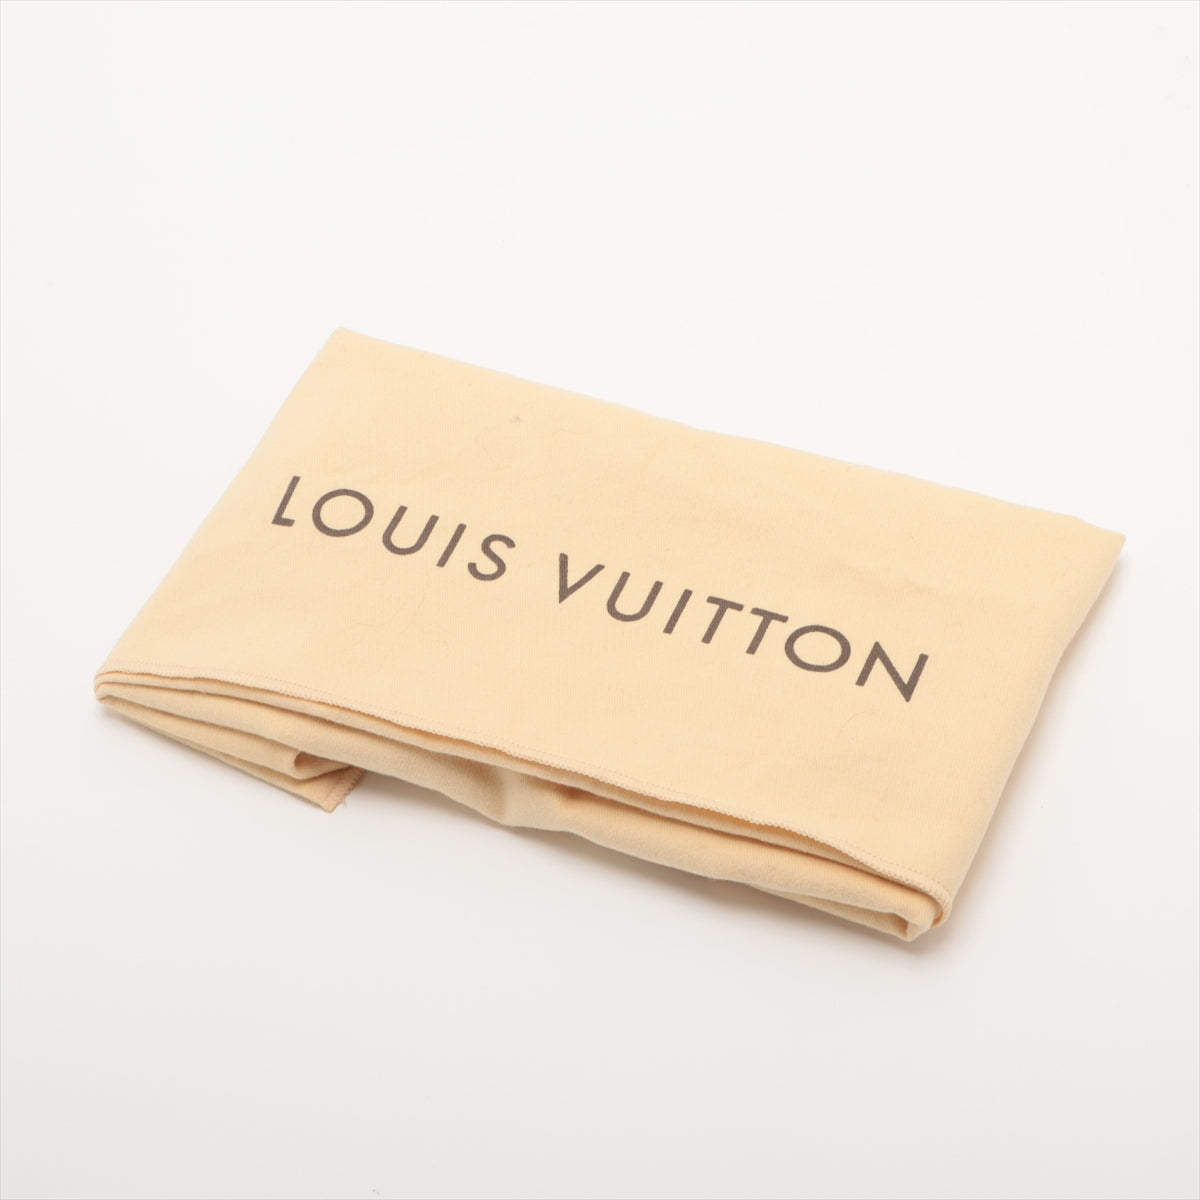 Louis Vuitton Monogram Neverfull PM M40155 Initial Into